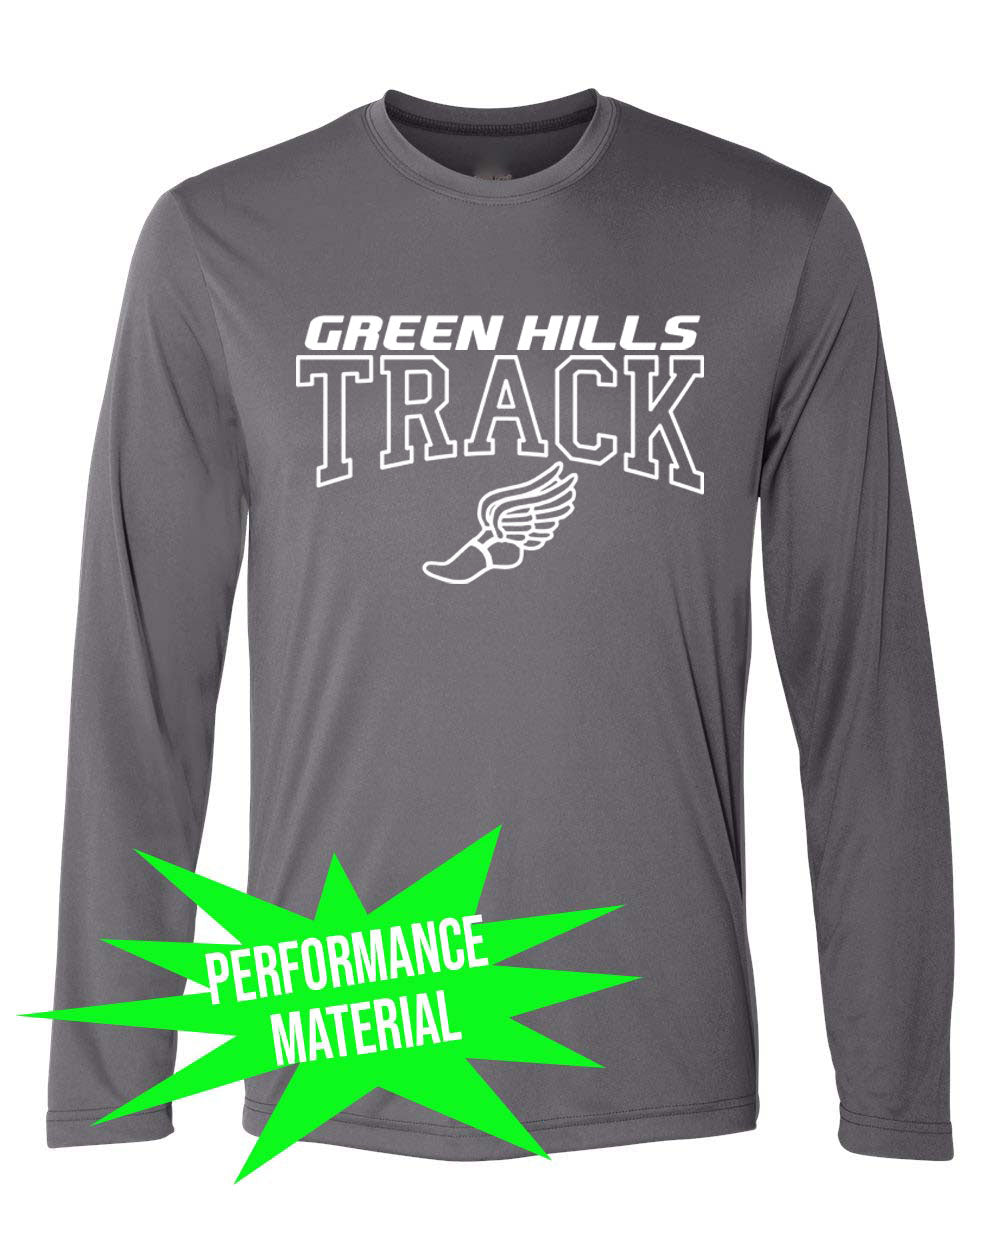 Green Hills Track Performance Material Design 3 Long Sleeve Shirt